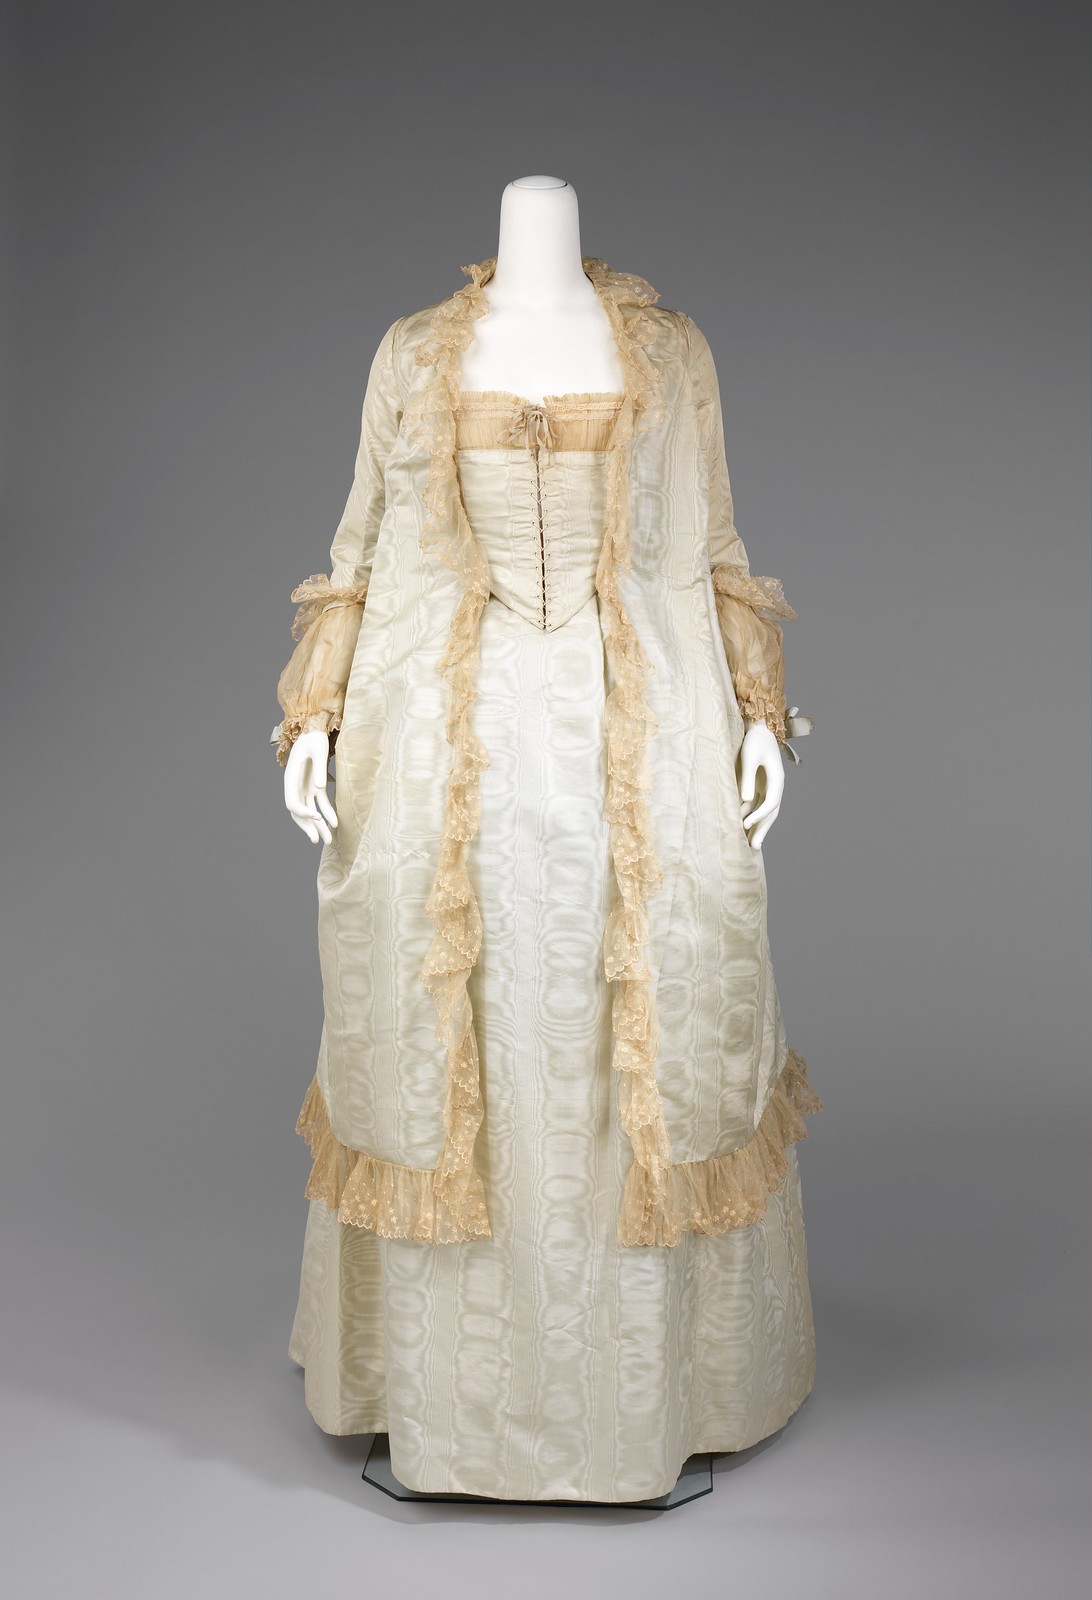 c1878. American. Silk, cotton. metmuseum